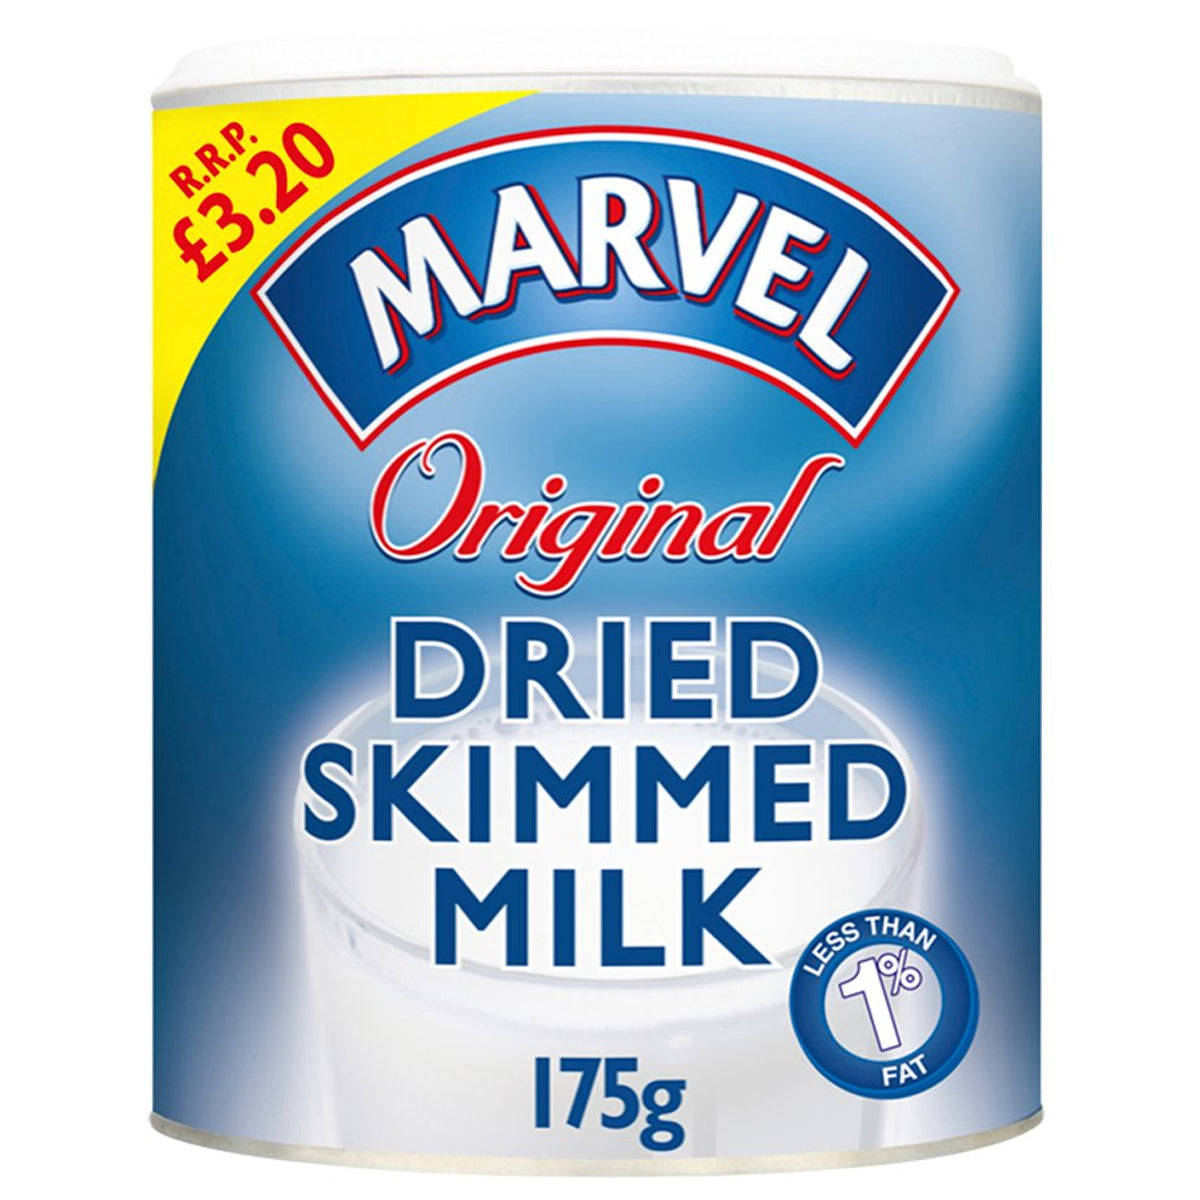 Marvel - Dried Skimmed Milk - 175g original dry skimmed milk.